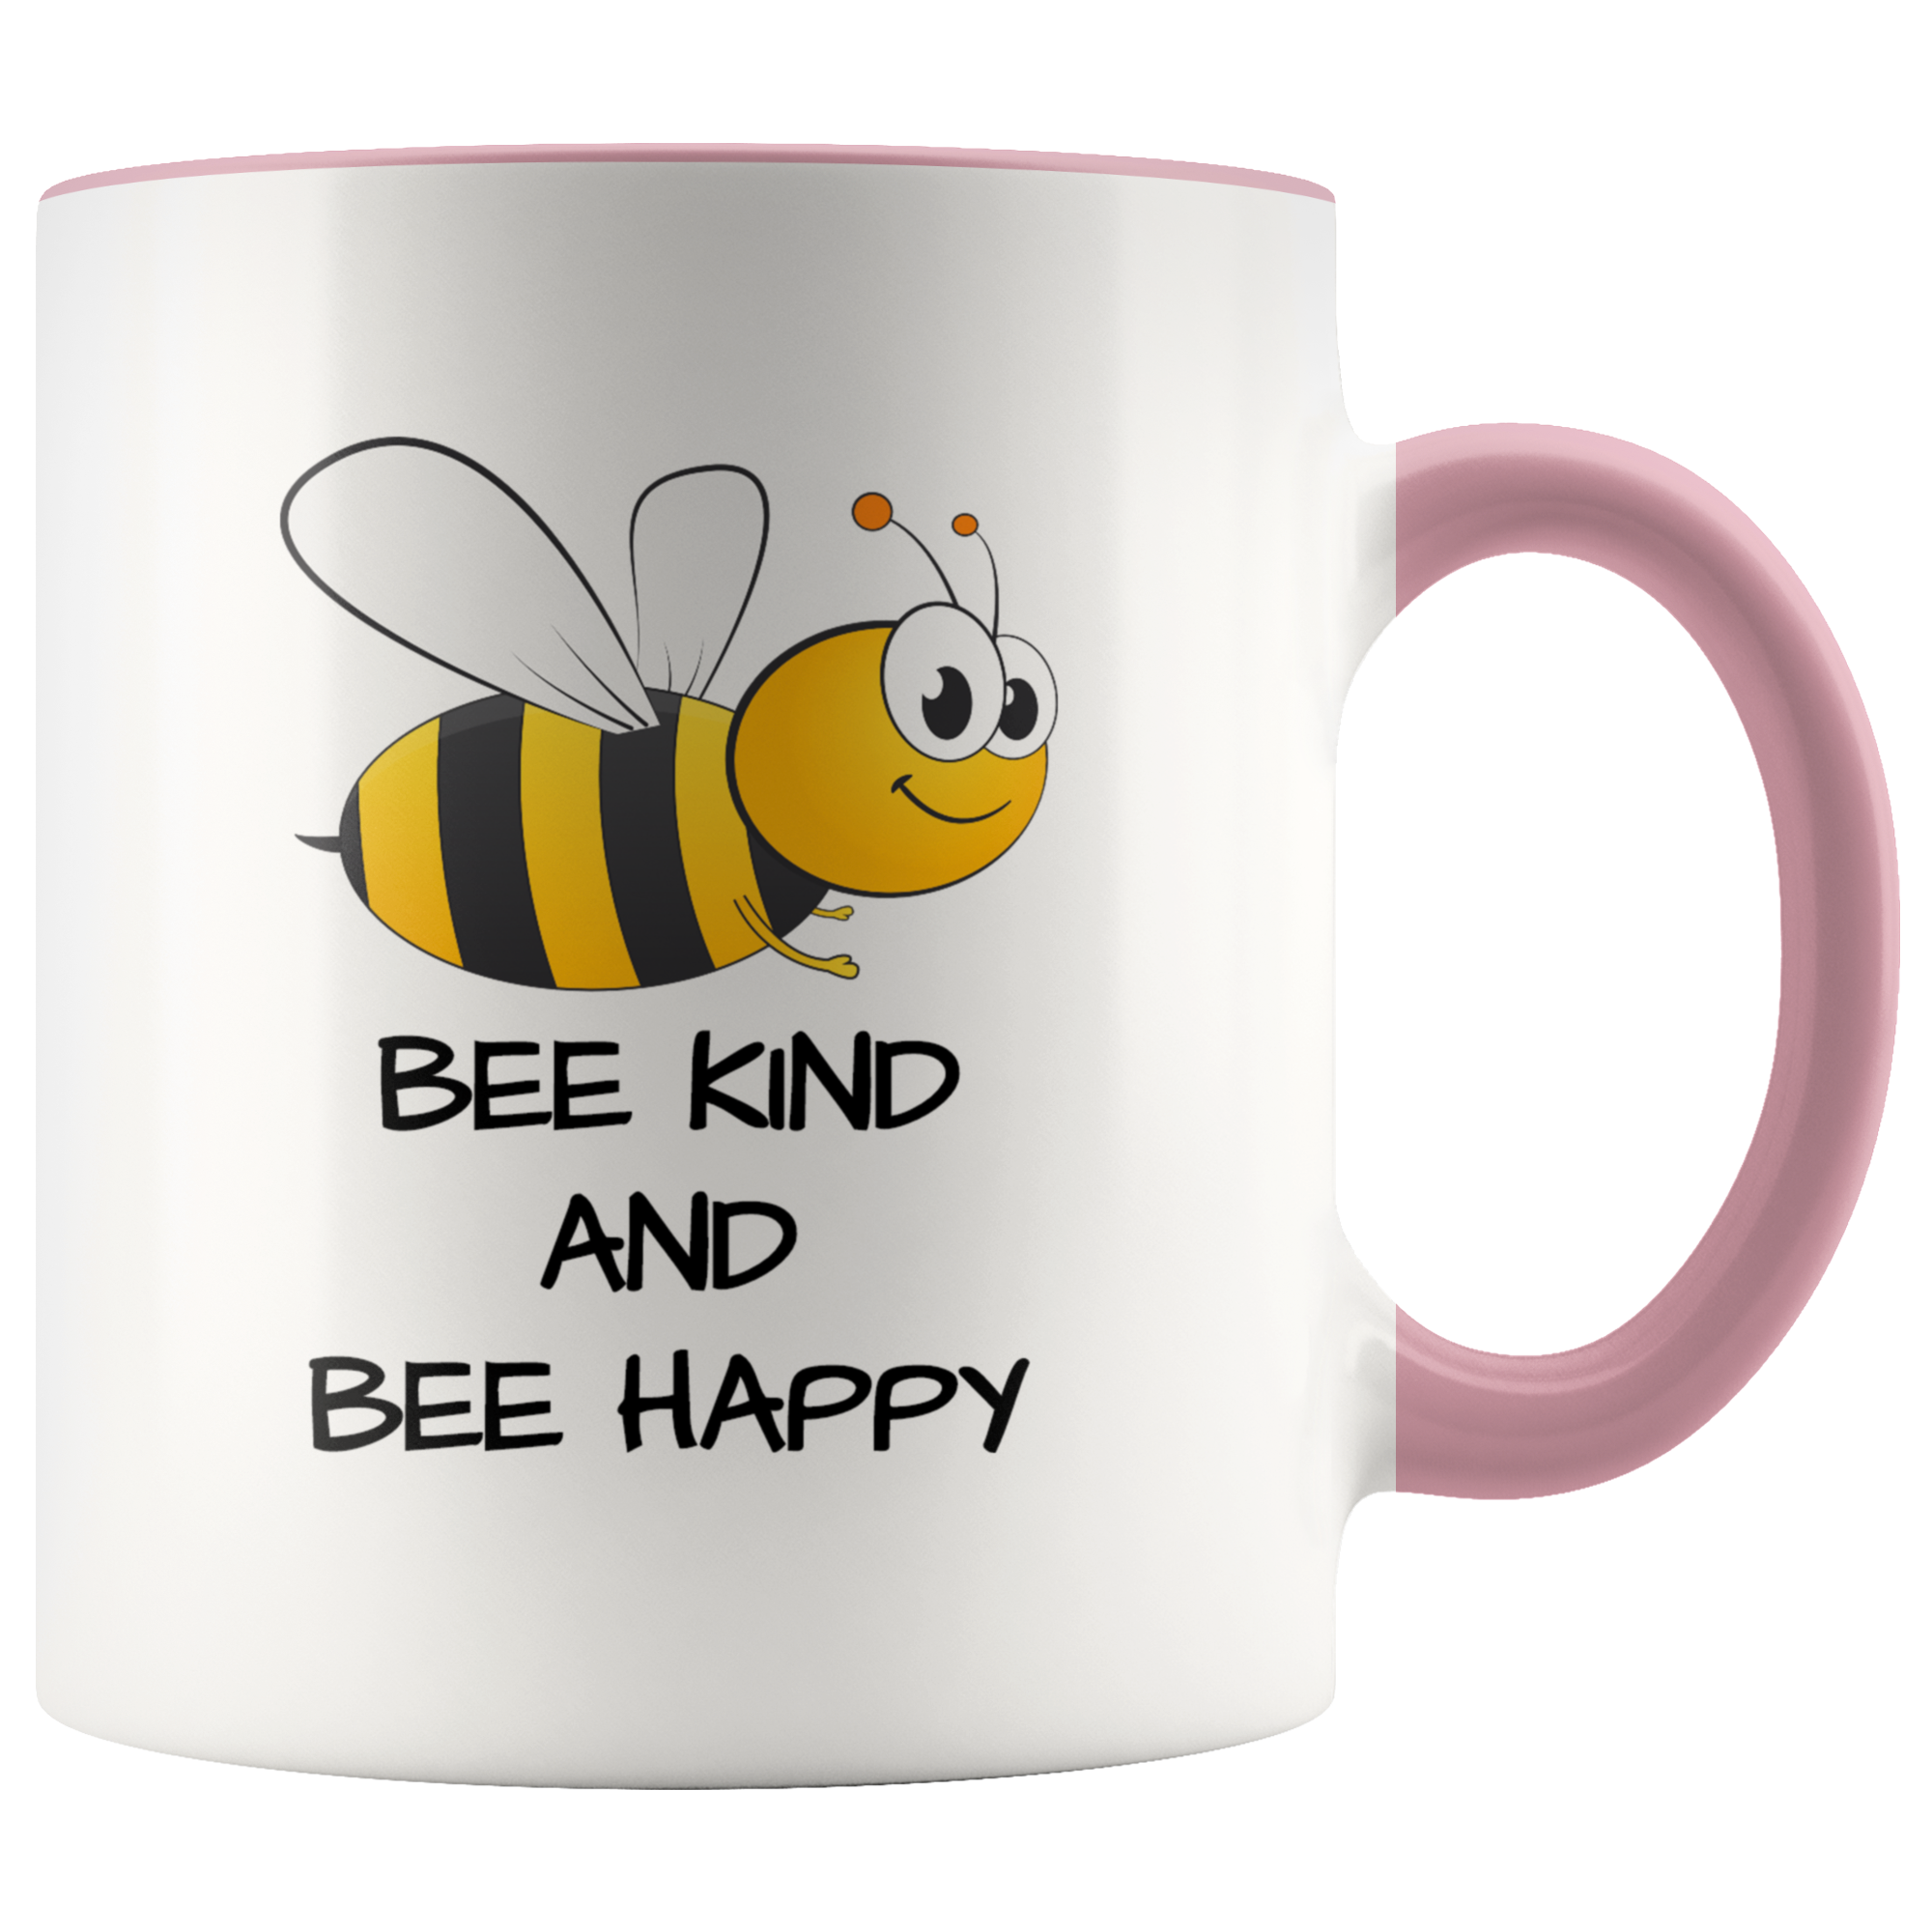 Bee Kind and Bee Happy Mug